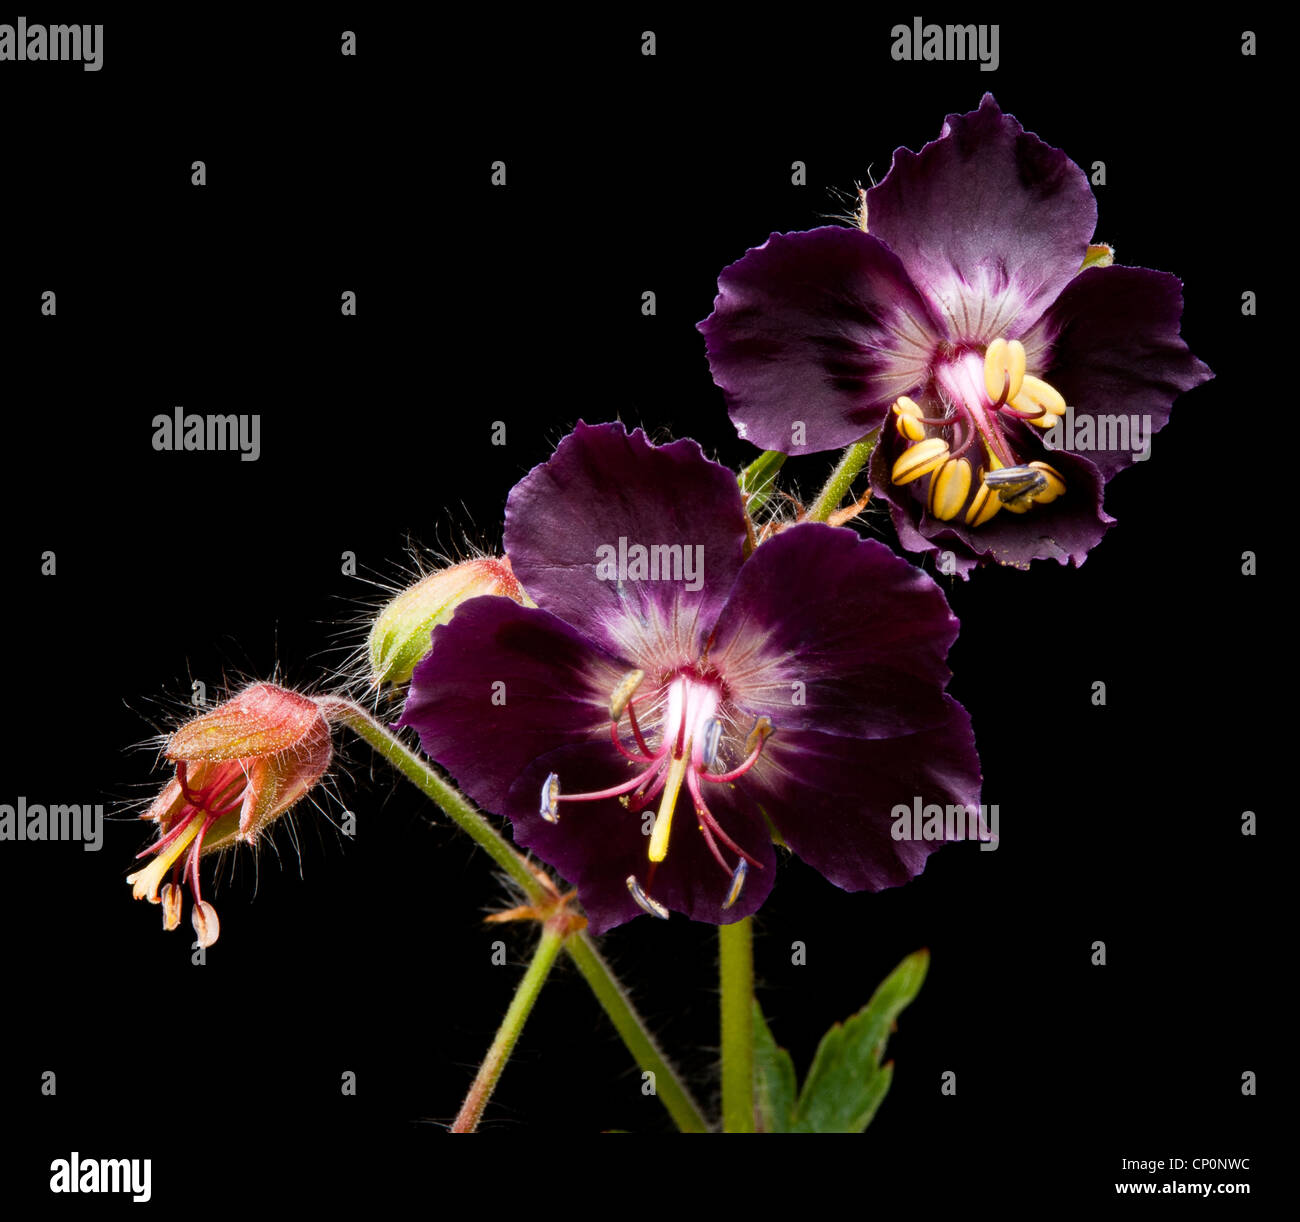 Mourning Widow Geranium Phaeum Flower and Bud on Black Background Stock Photo